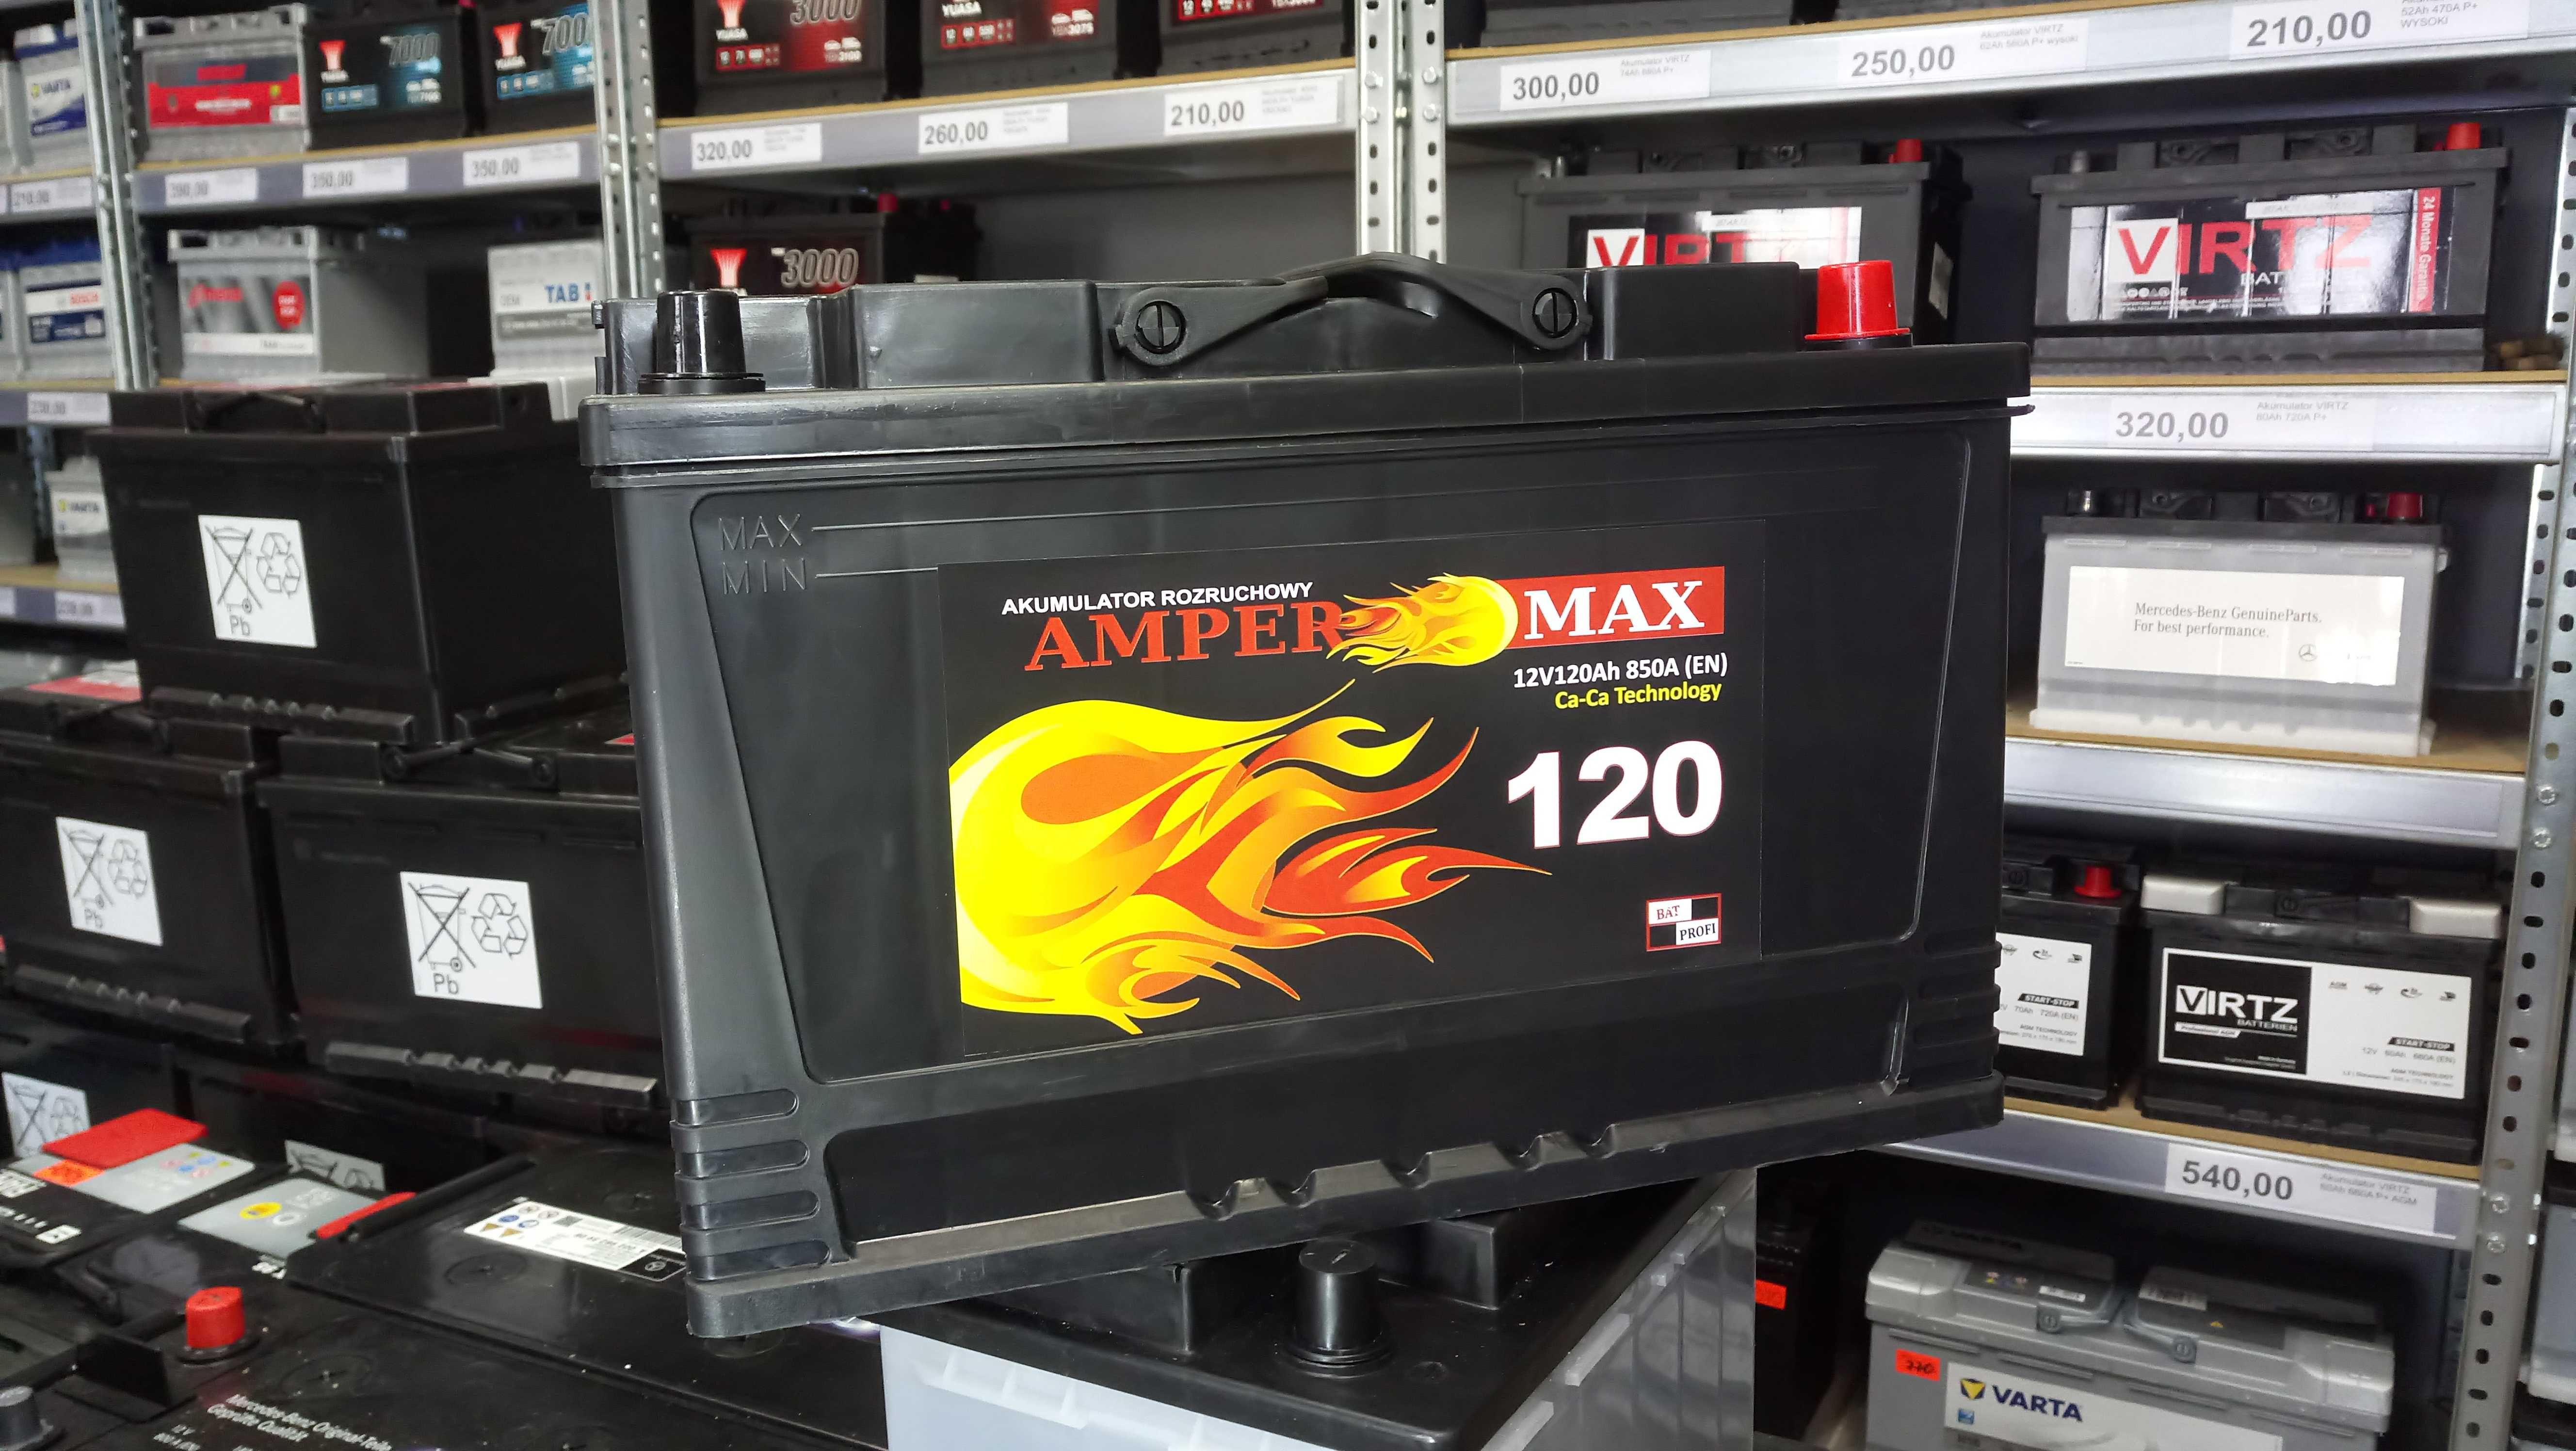 Akumulator Ampermax Jenox 12V 120AH 850A P+ nowy